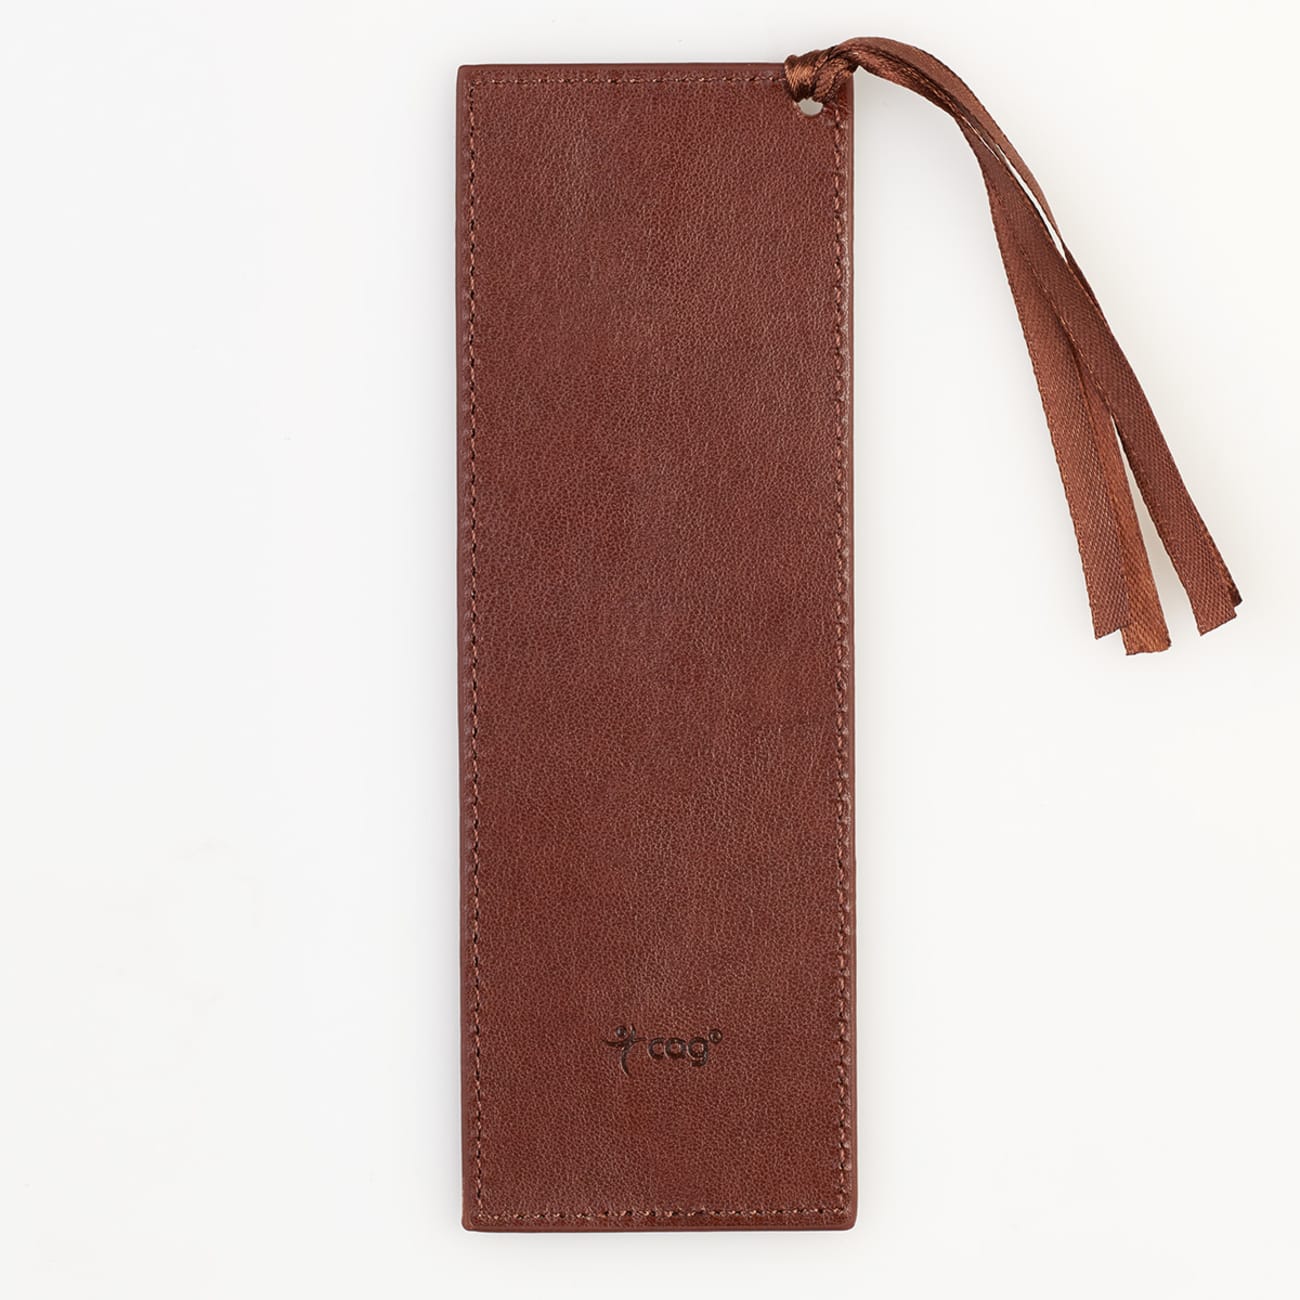 Bookmark Tassel: Steadfast Love, Brown/Tan Imitation Leather